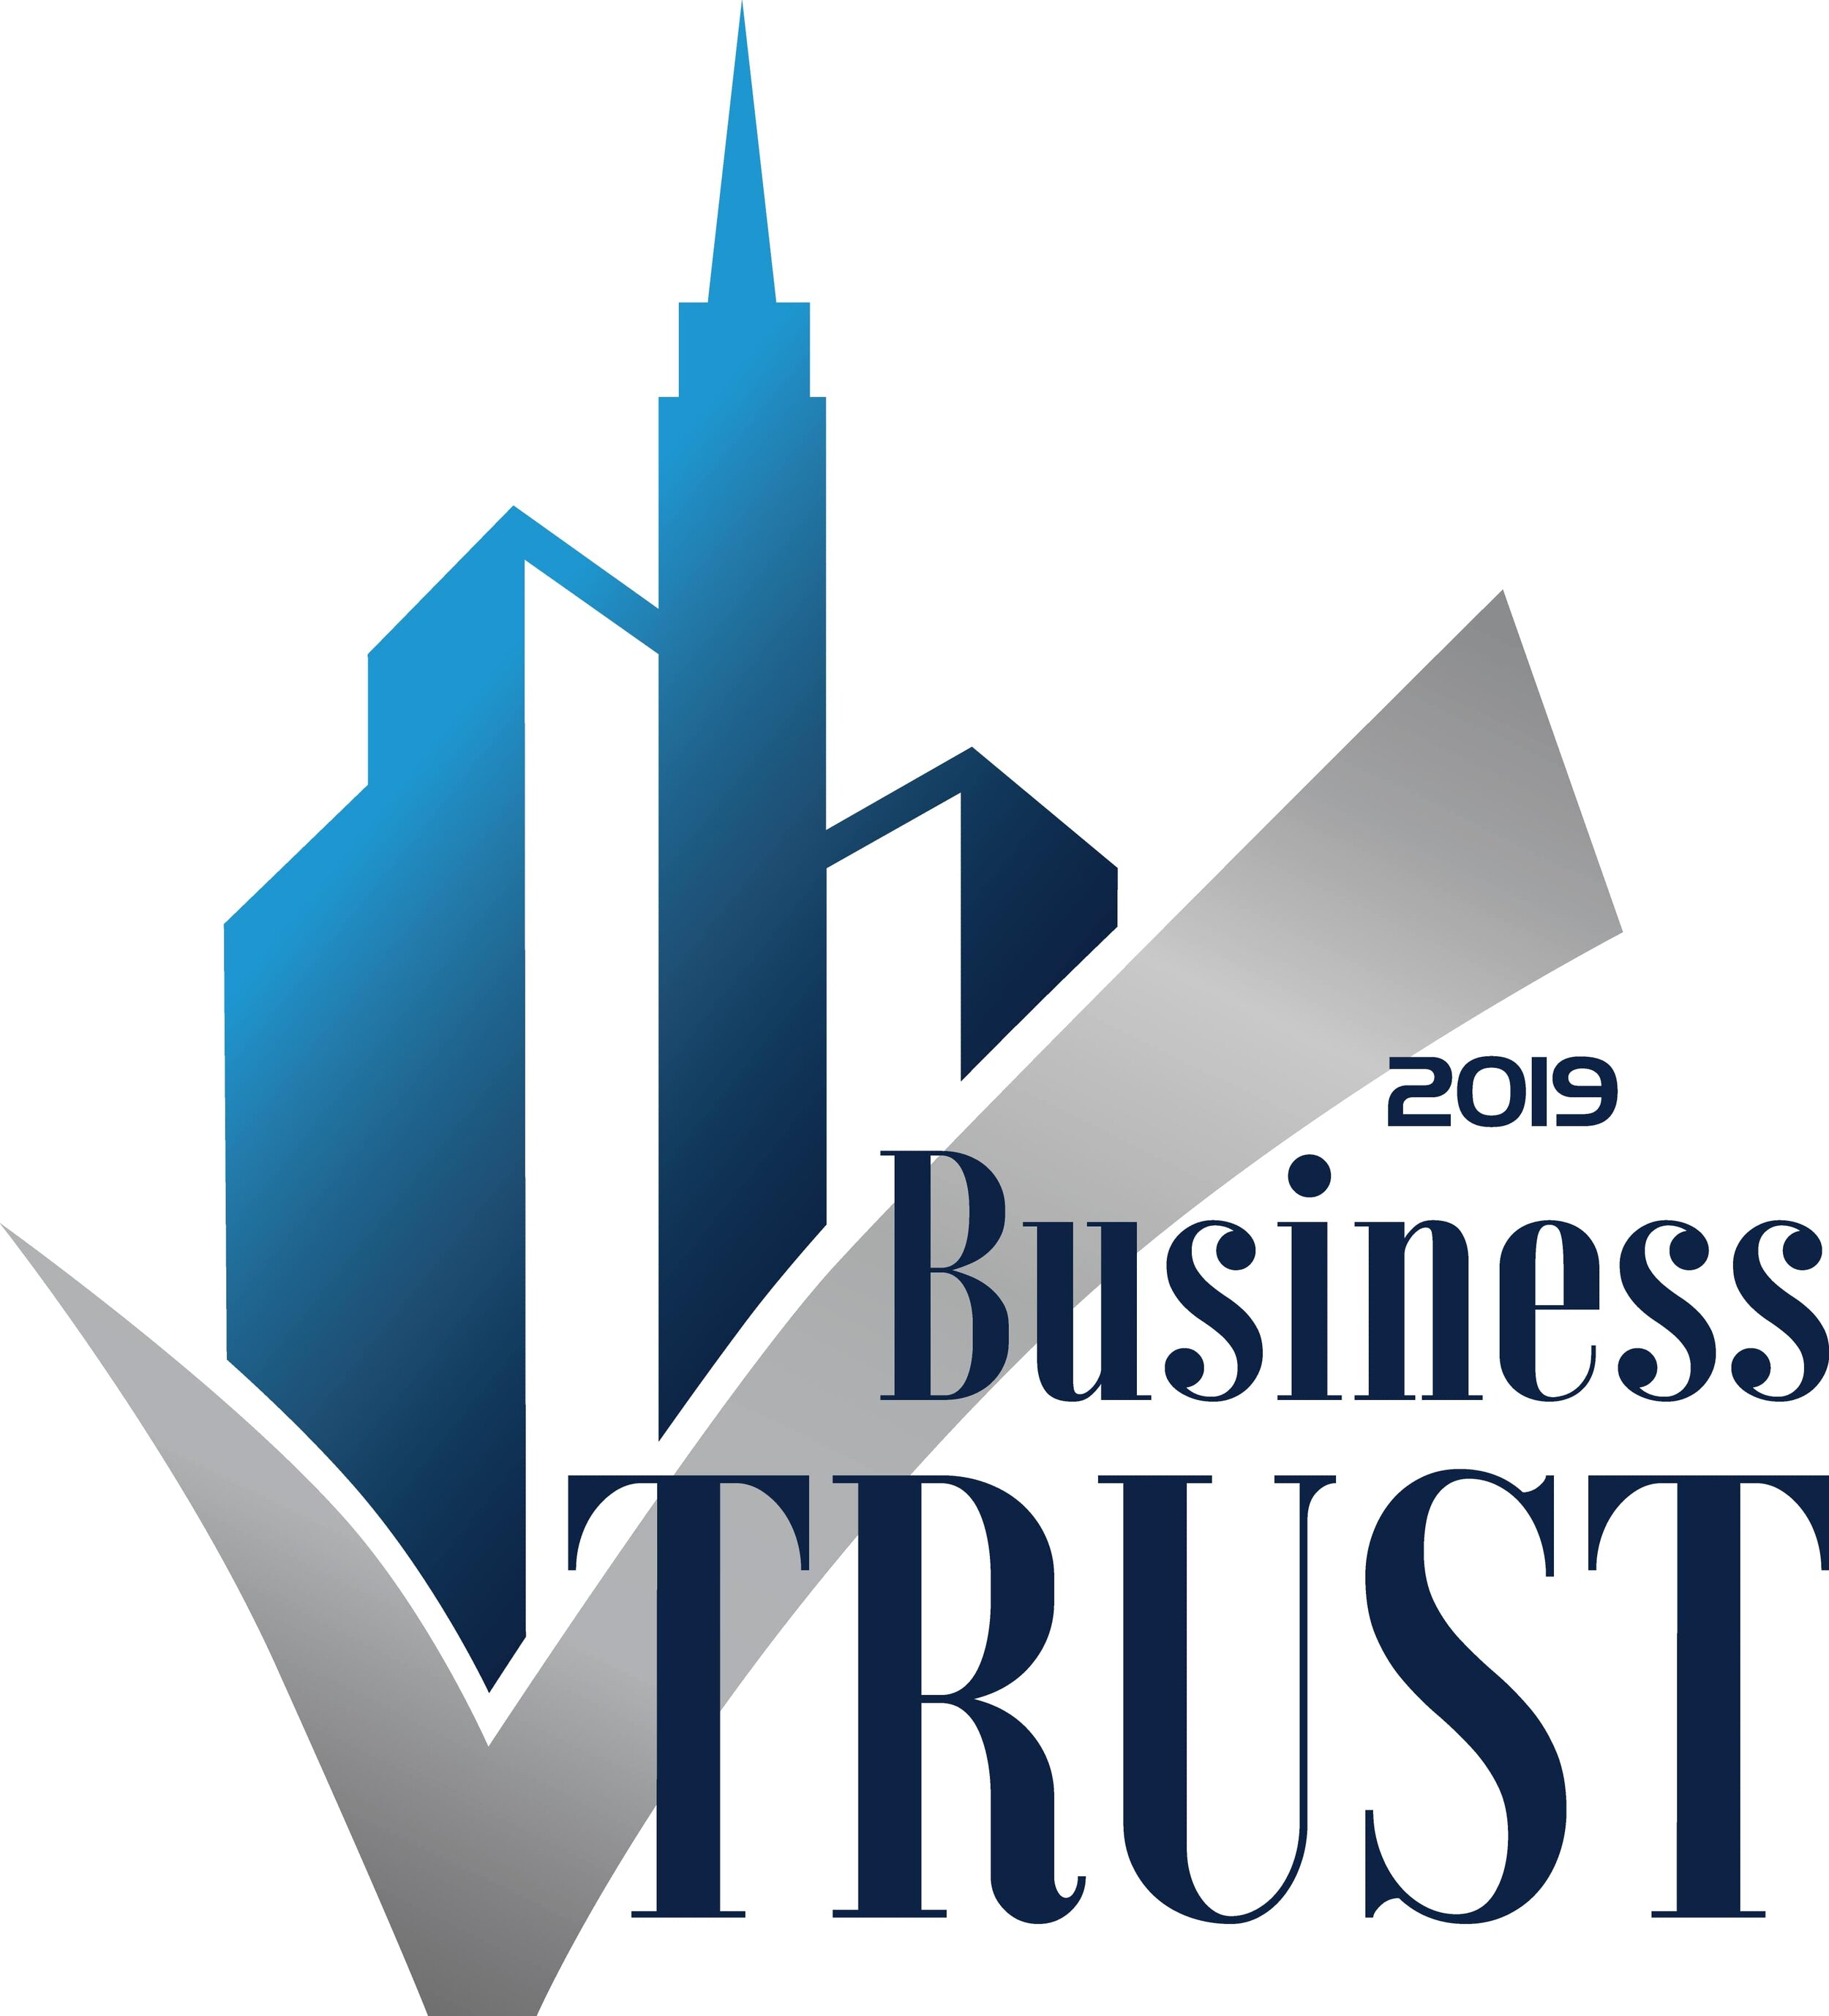 Business Trust 2019.png.jpg